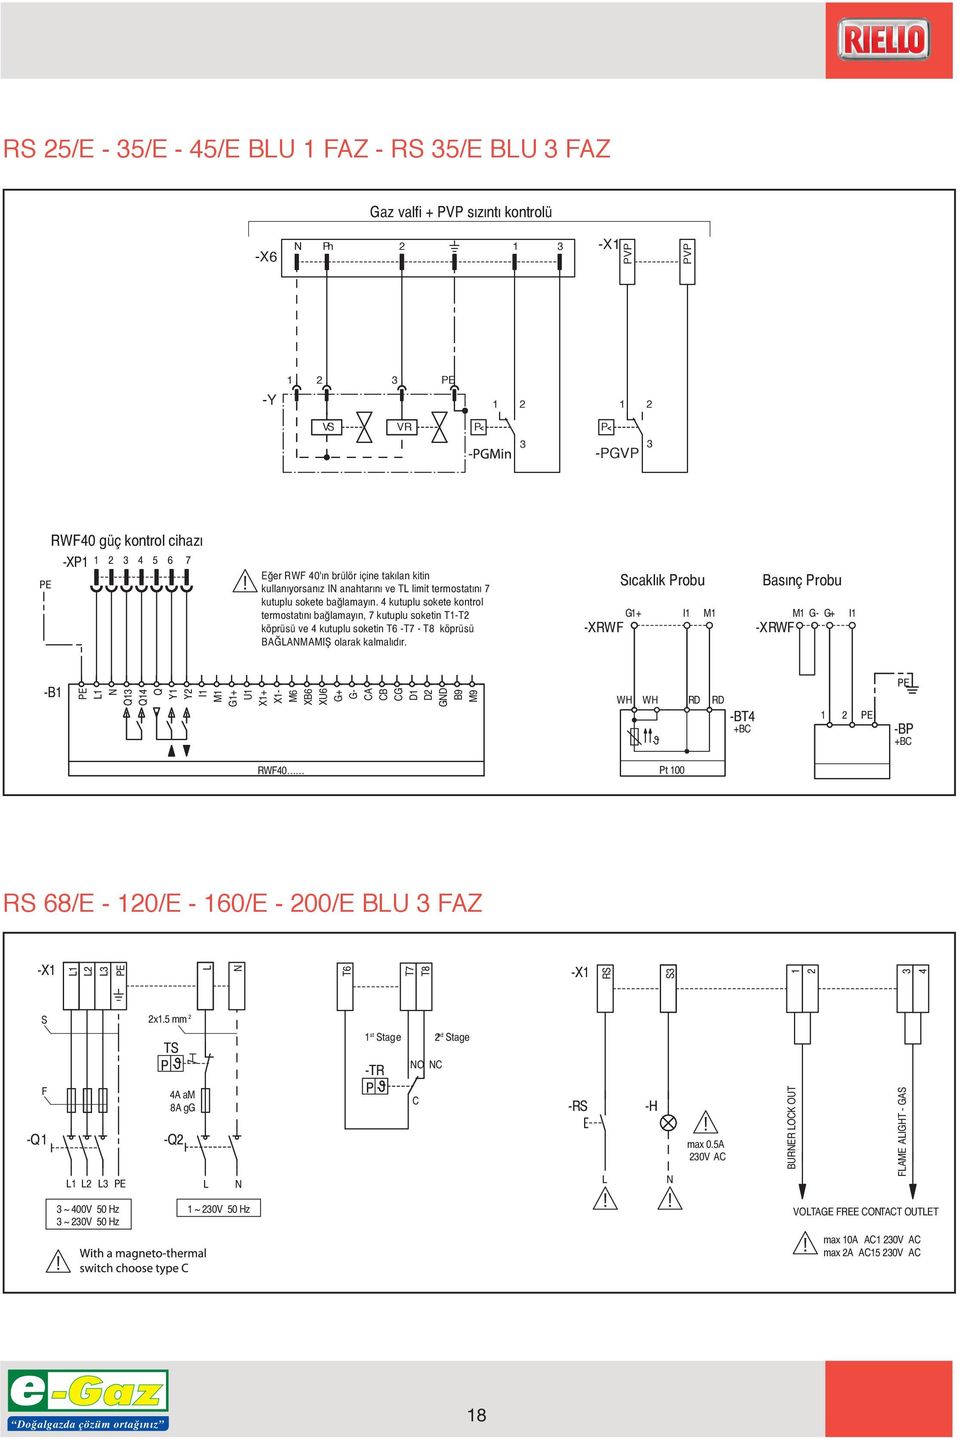 4 kutuplu sokete kontrol termostat n ba lamay n, 7 kutuplu soketin T1-T2 köprüsü ve 4 kutuplu soketin T6 -T7 - T8 köprüsü BA LANMAMIfi olarak kalmal d r.